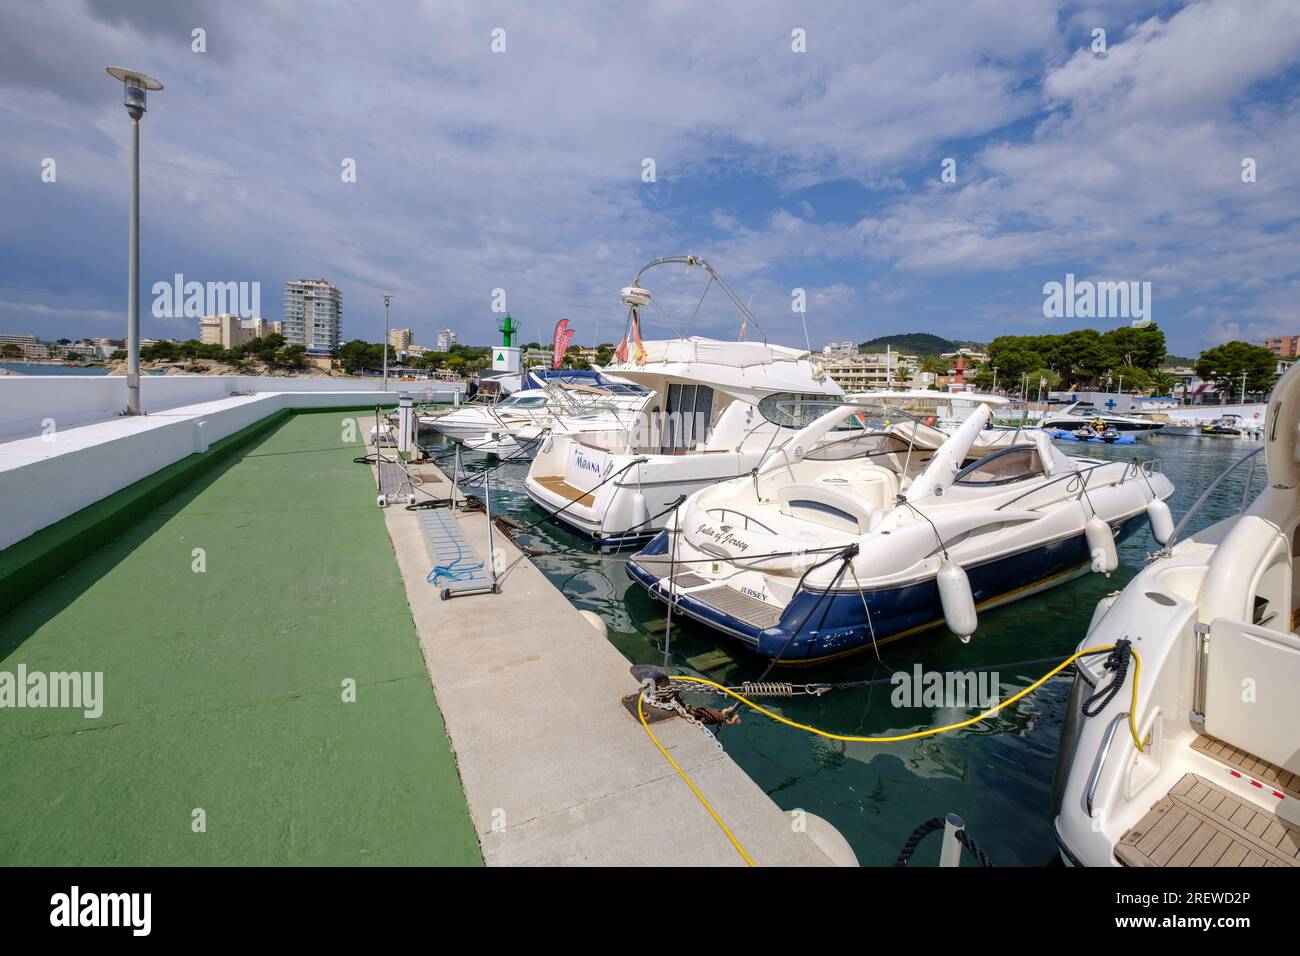 Palmanova Yacht Club, calvia, Majorca, Balearic Islands, Spain Stock Photo